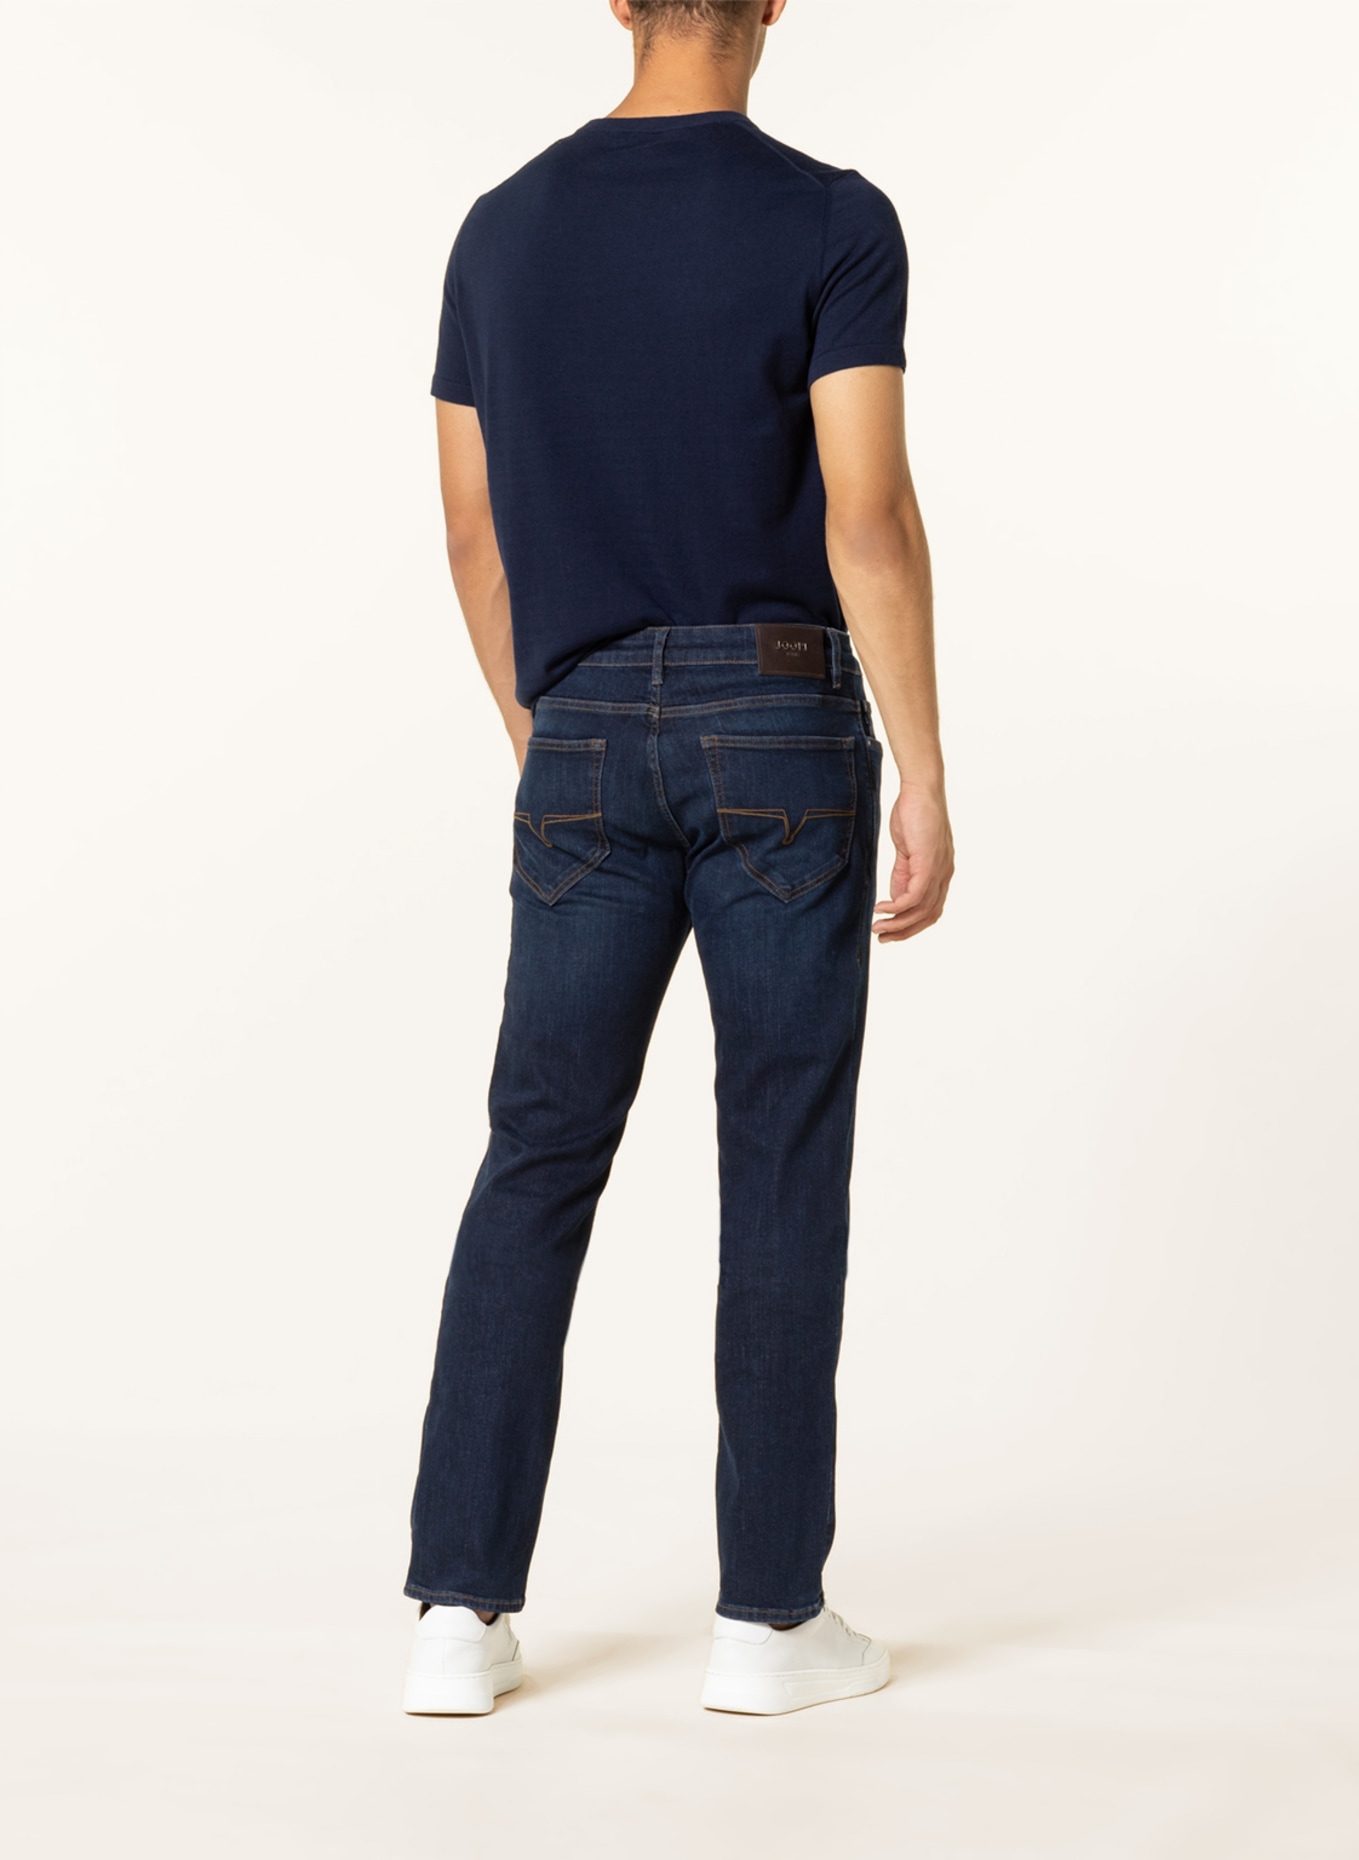 JOOP! JEANS Jeans MITCH Modern Fit, Farbe: 415 Navy                       415 (Bild 3)